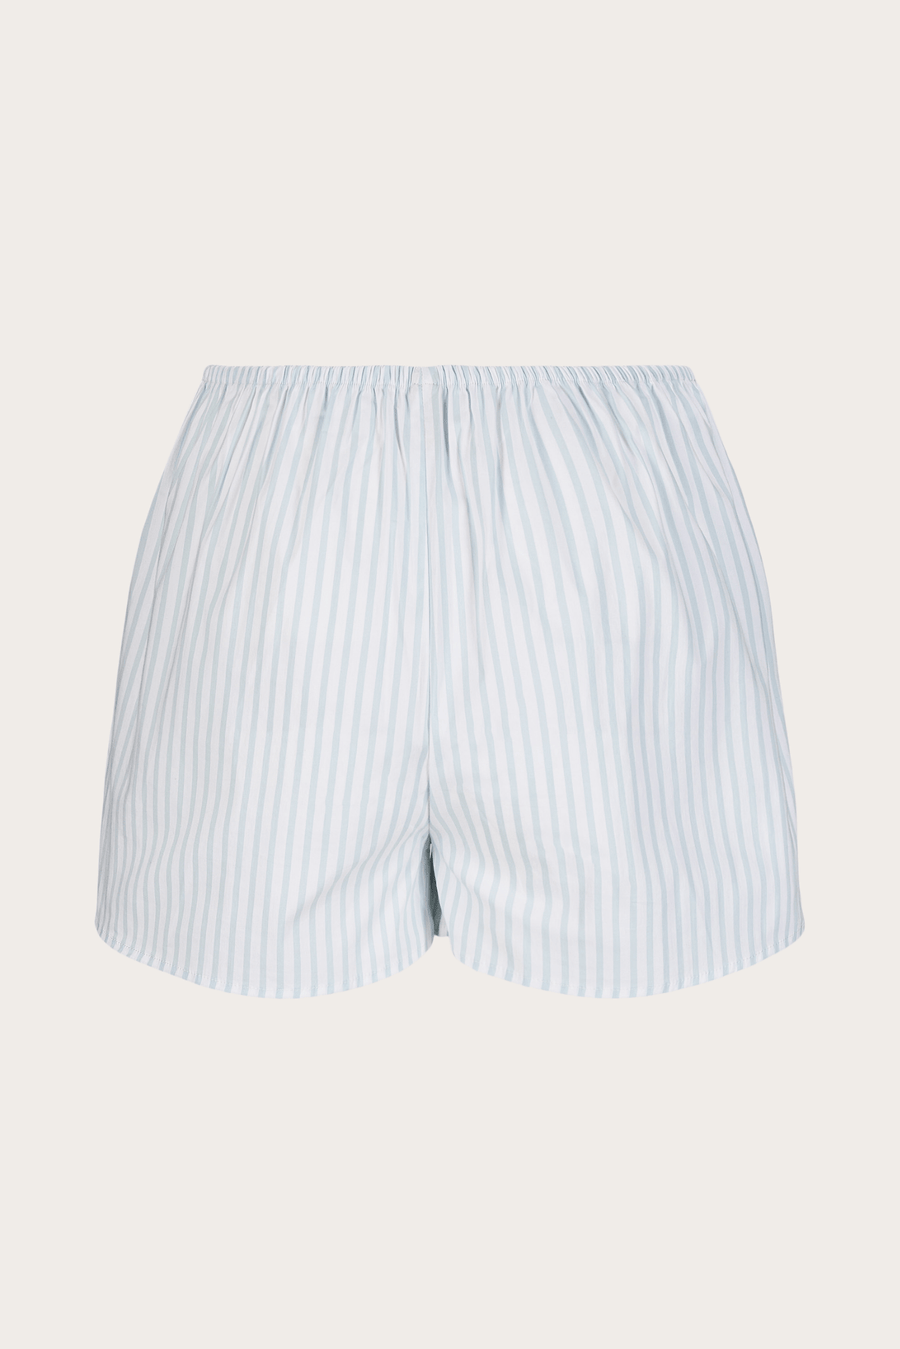 VendelaWear PJ-shorts PJ-Shorts - Justøya - Light Blue Stripe